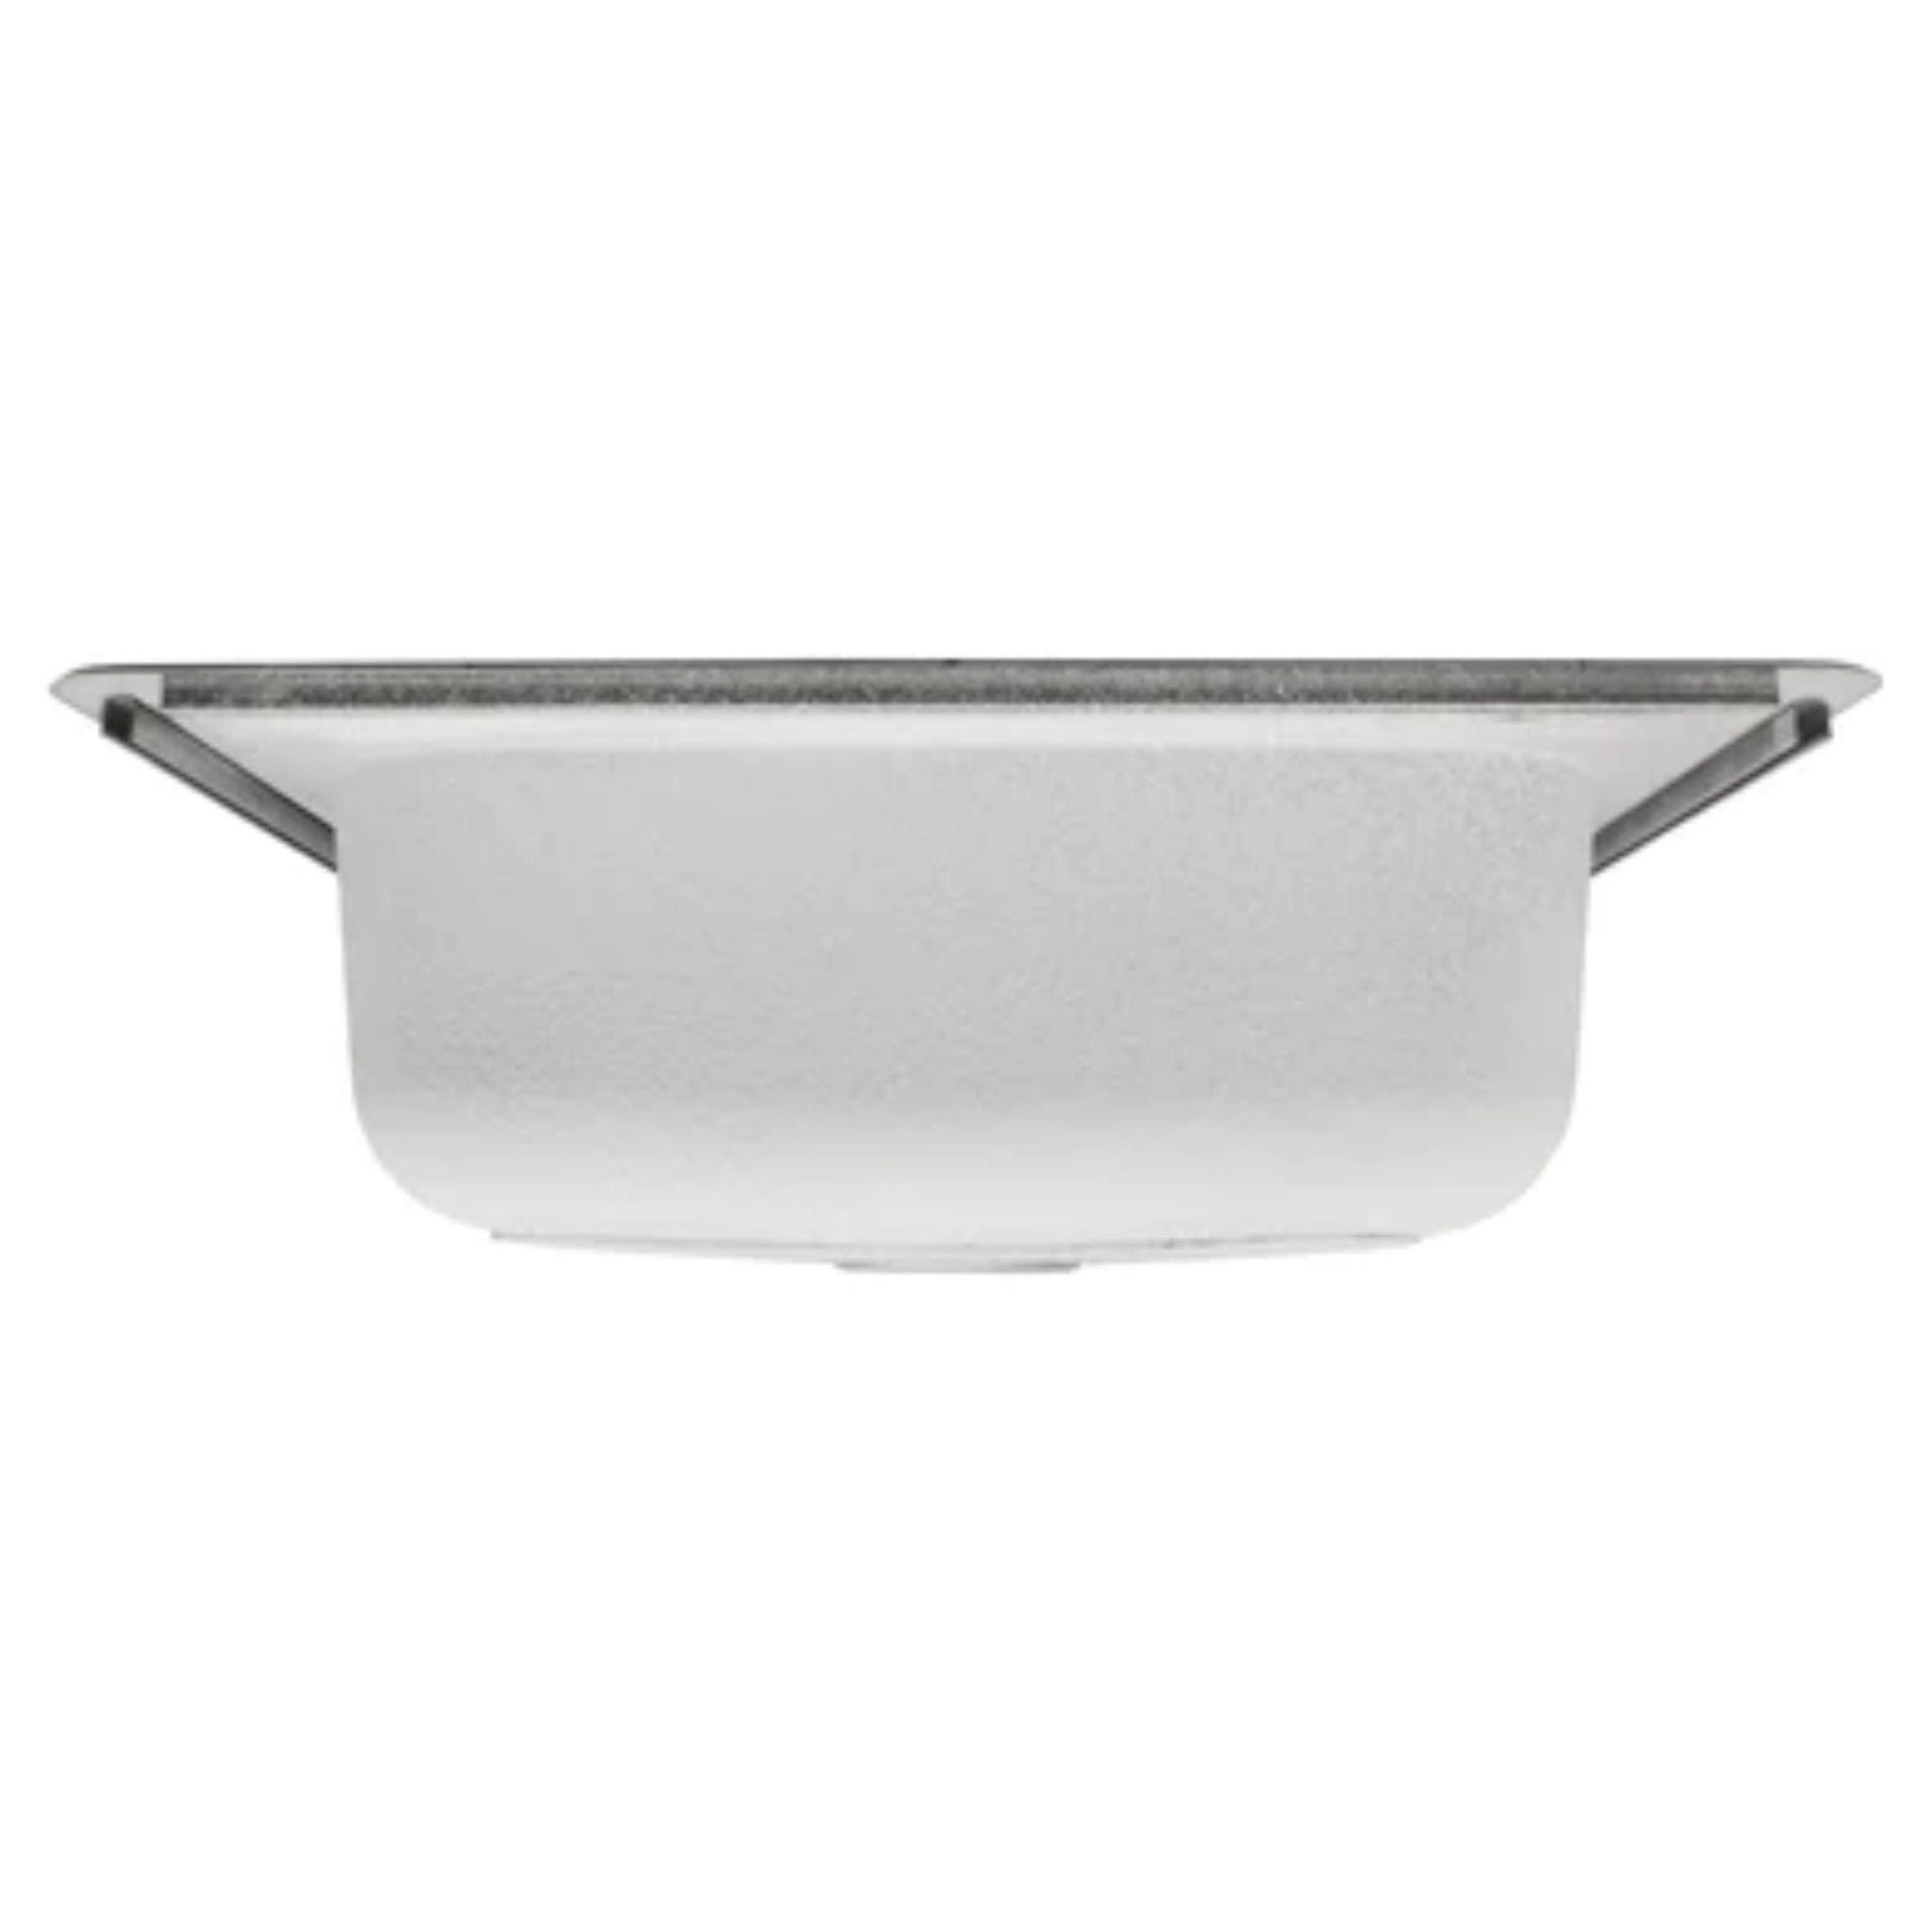 LessCare Top Mount Stainless Steel Single Basin Kitchen Sink - LT64